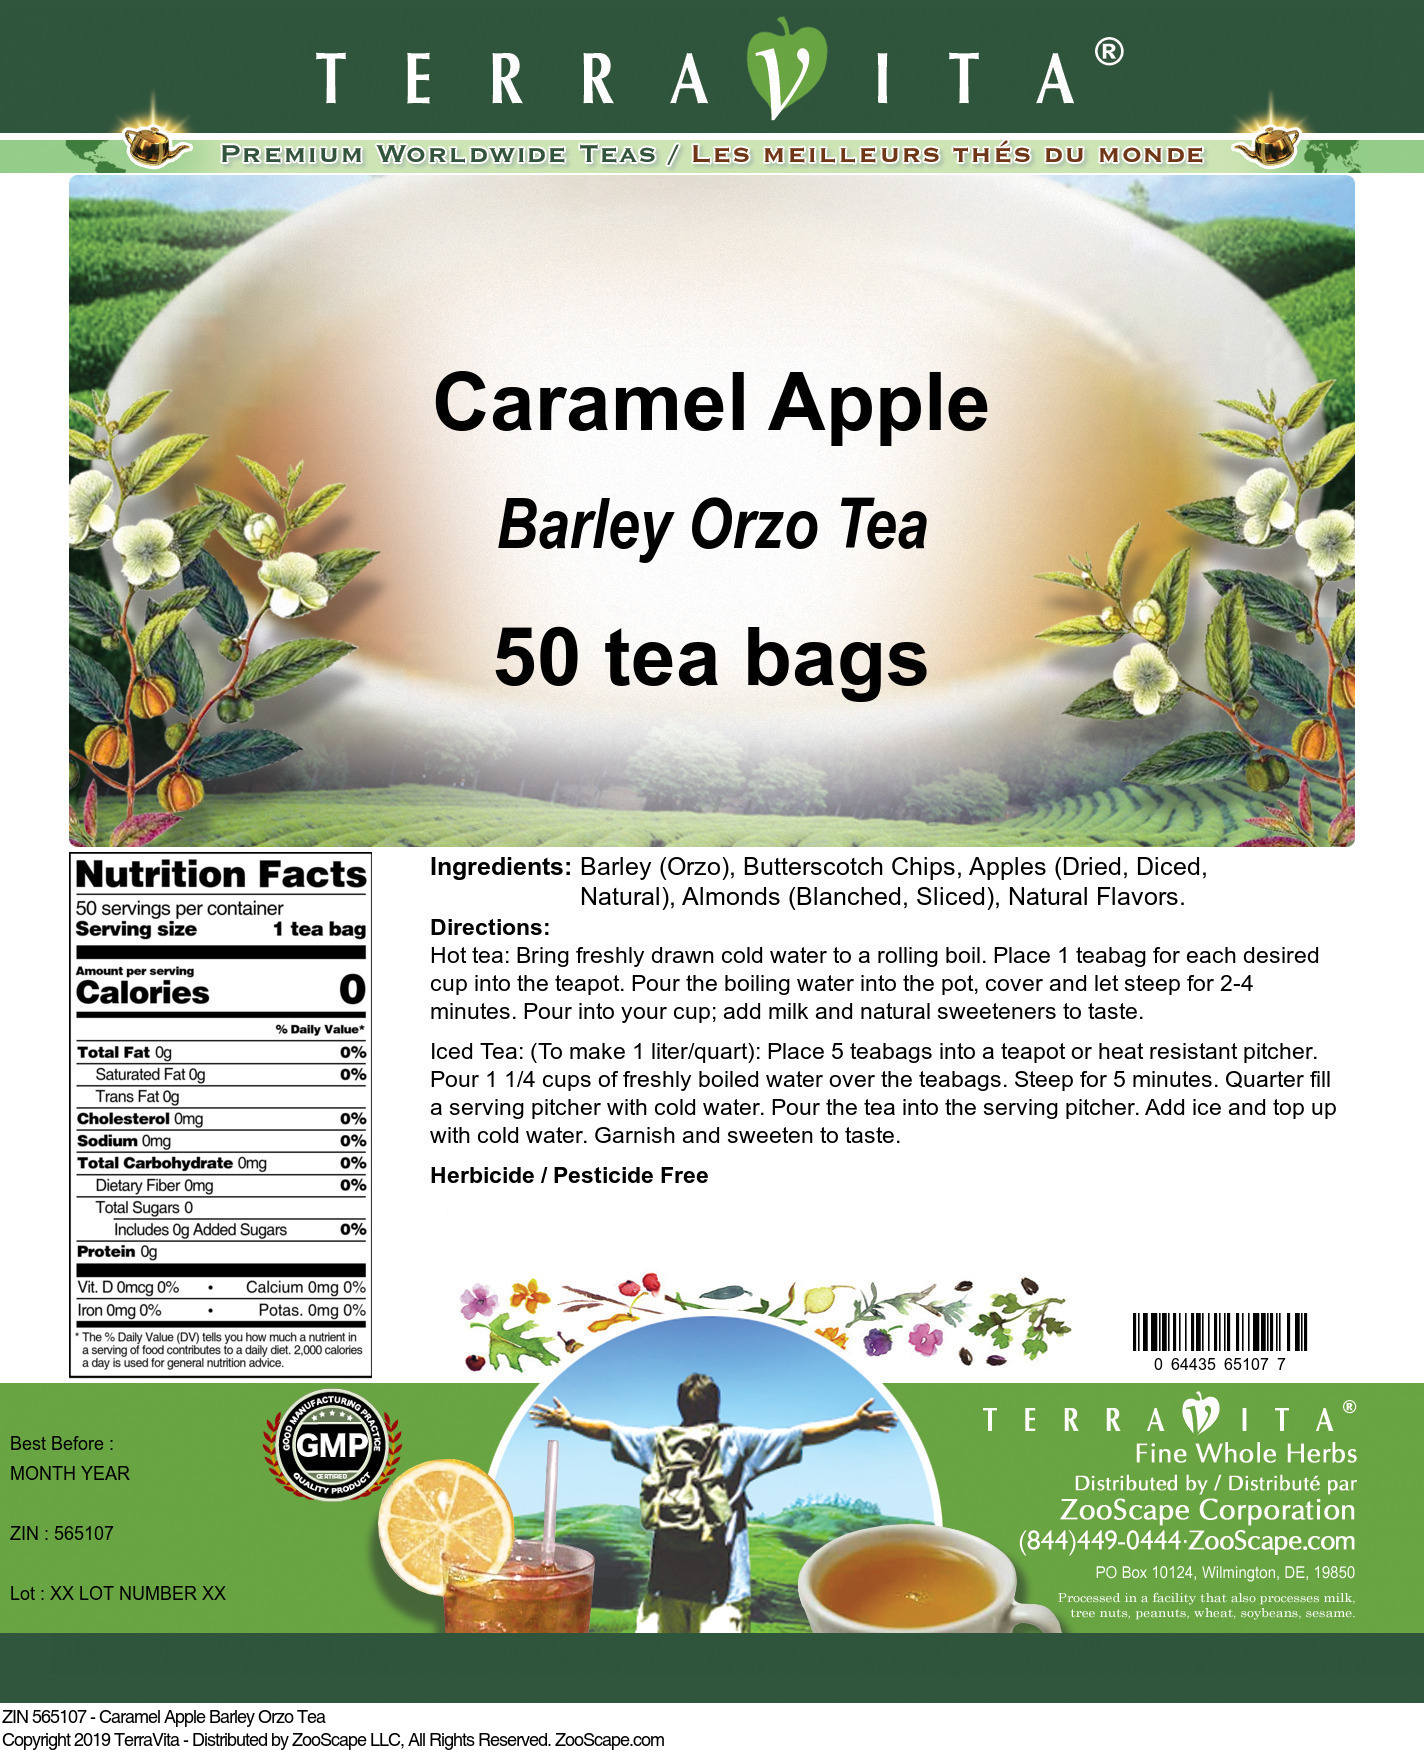 Caramel Apple Barley Orzo Tea - Label